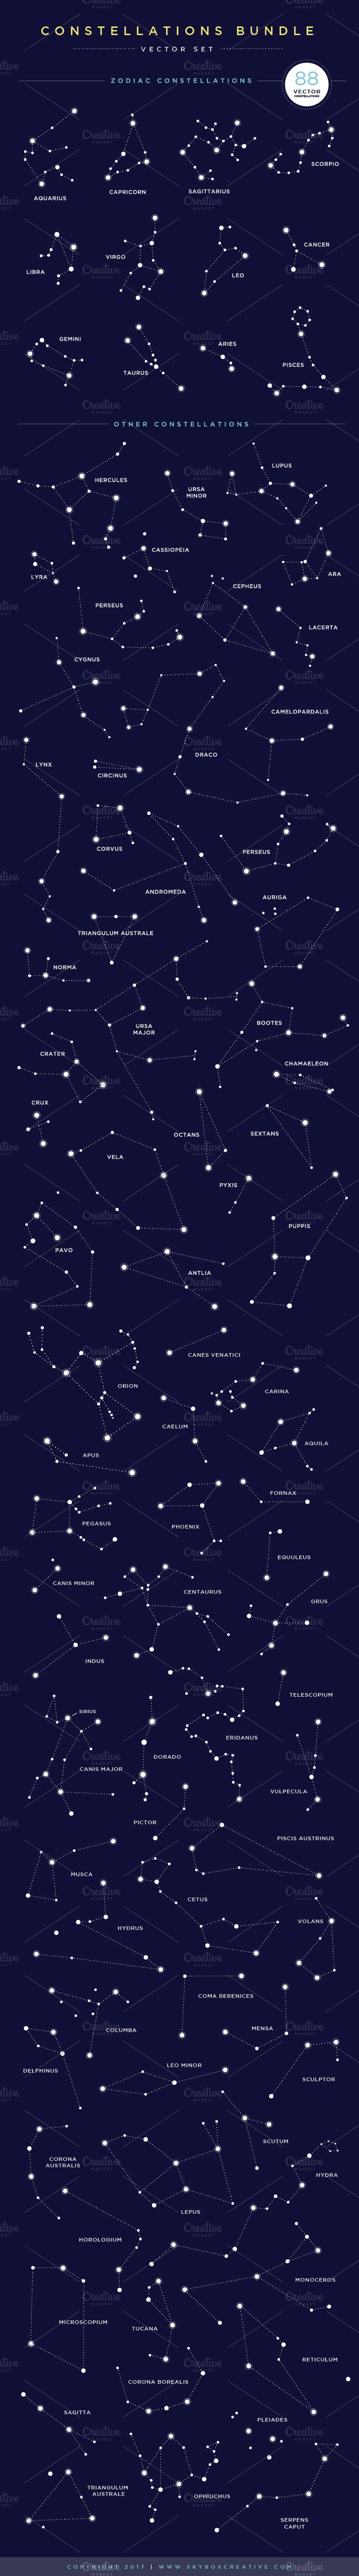 4 88 constellations vector bundle by skybox creative 80